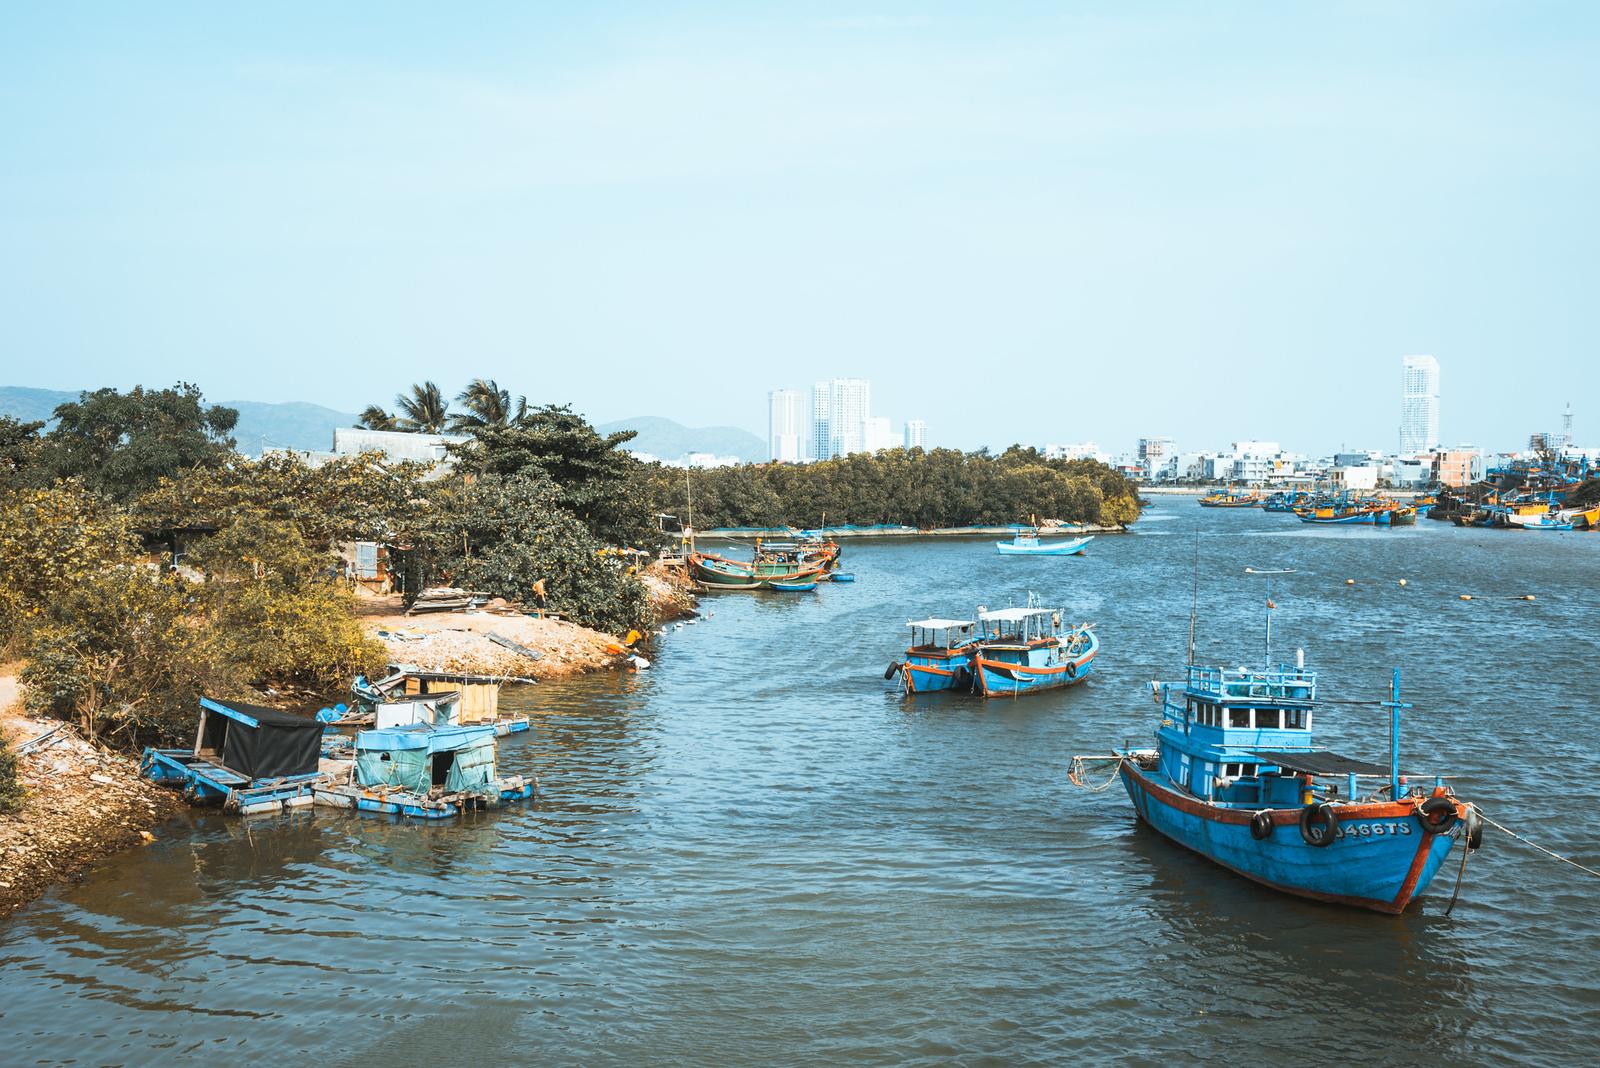 Crossing Ha Thanh River